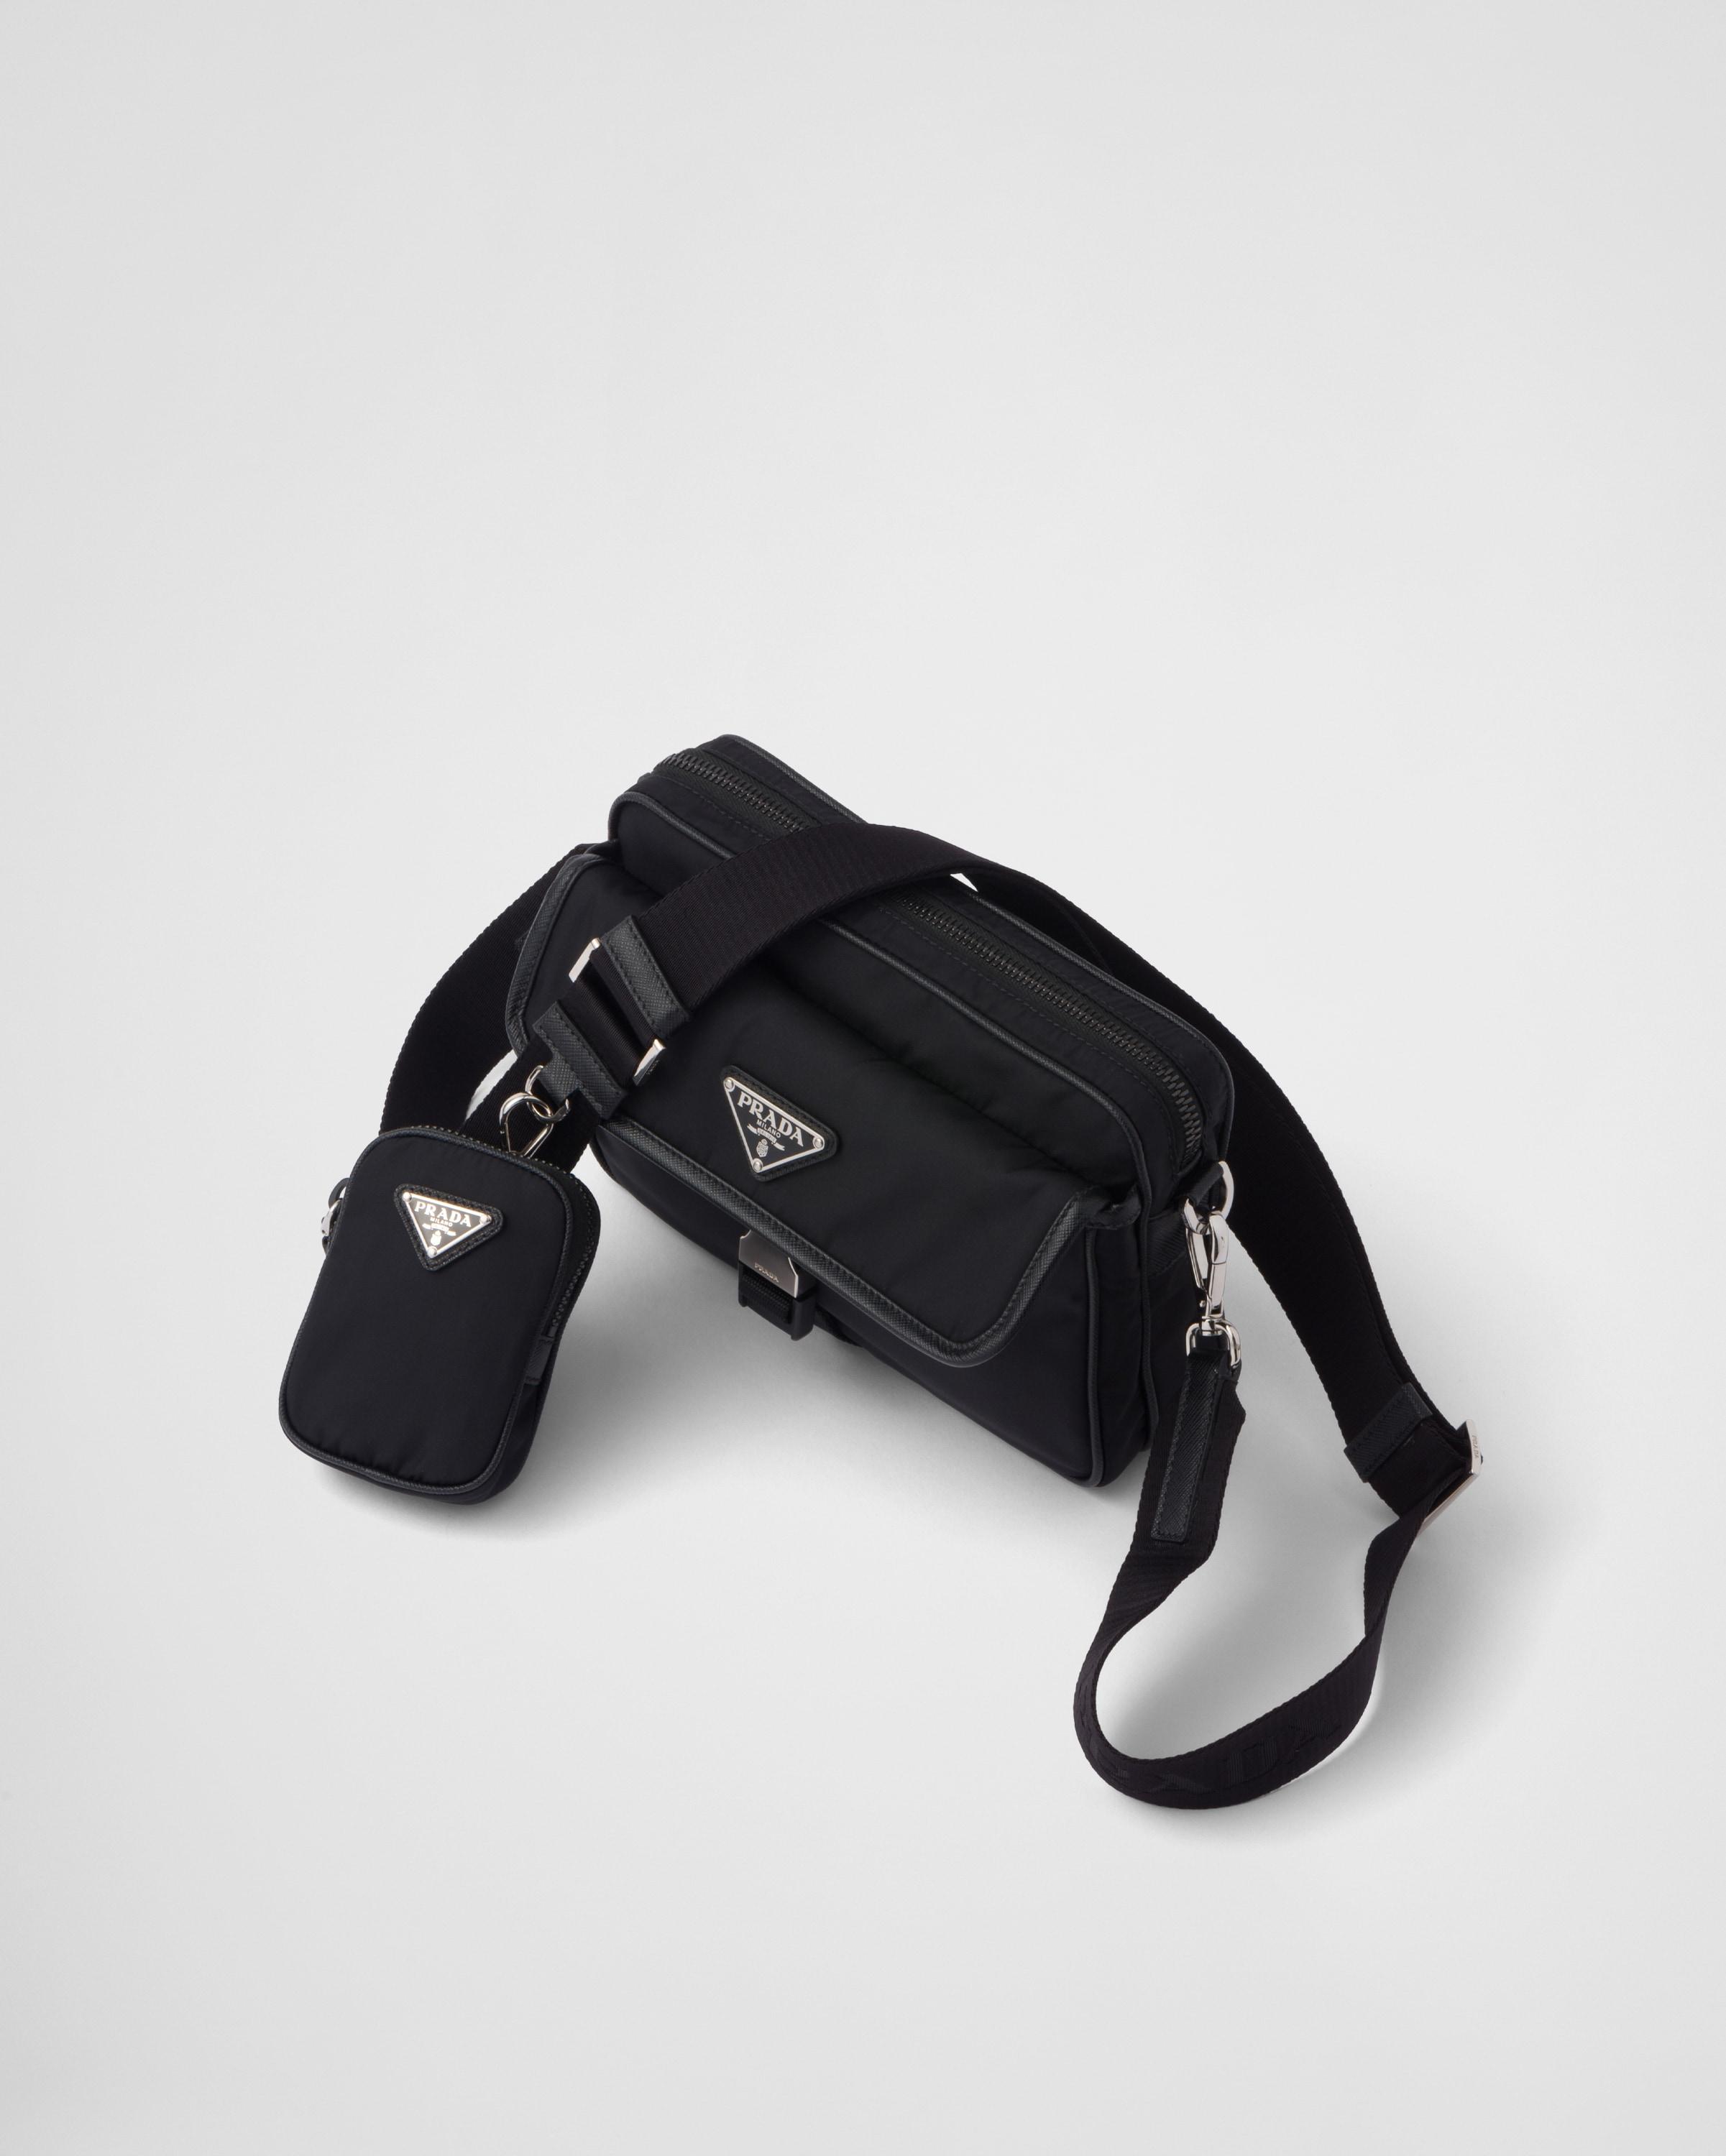 Prada Men Bag with Saffiano Leather Shoulder Strap-Black